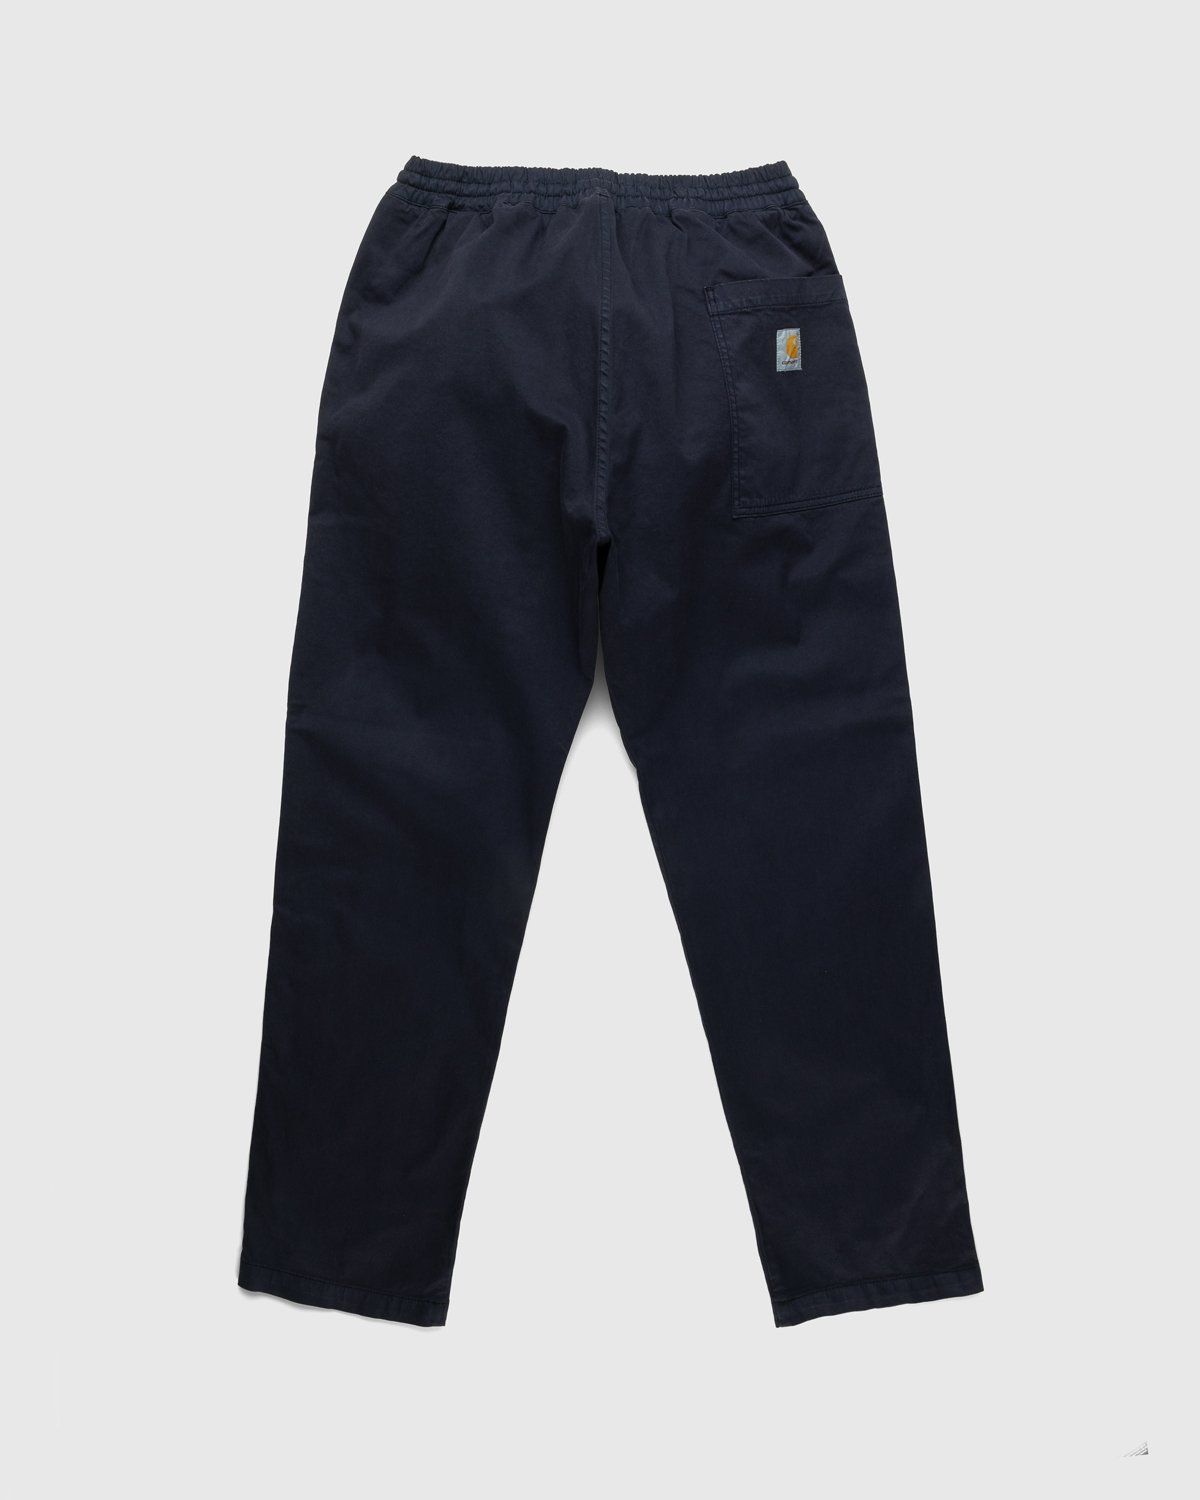 Carhartt WIP – Lawton Pant Navy - Pants - Blue - Image 2